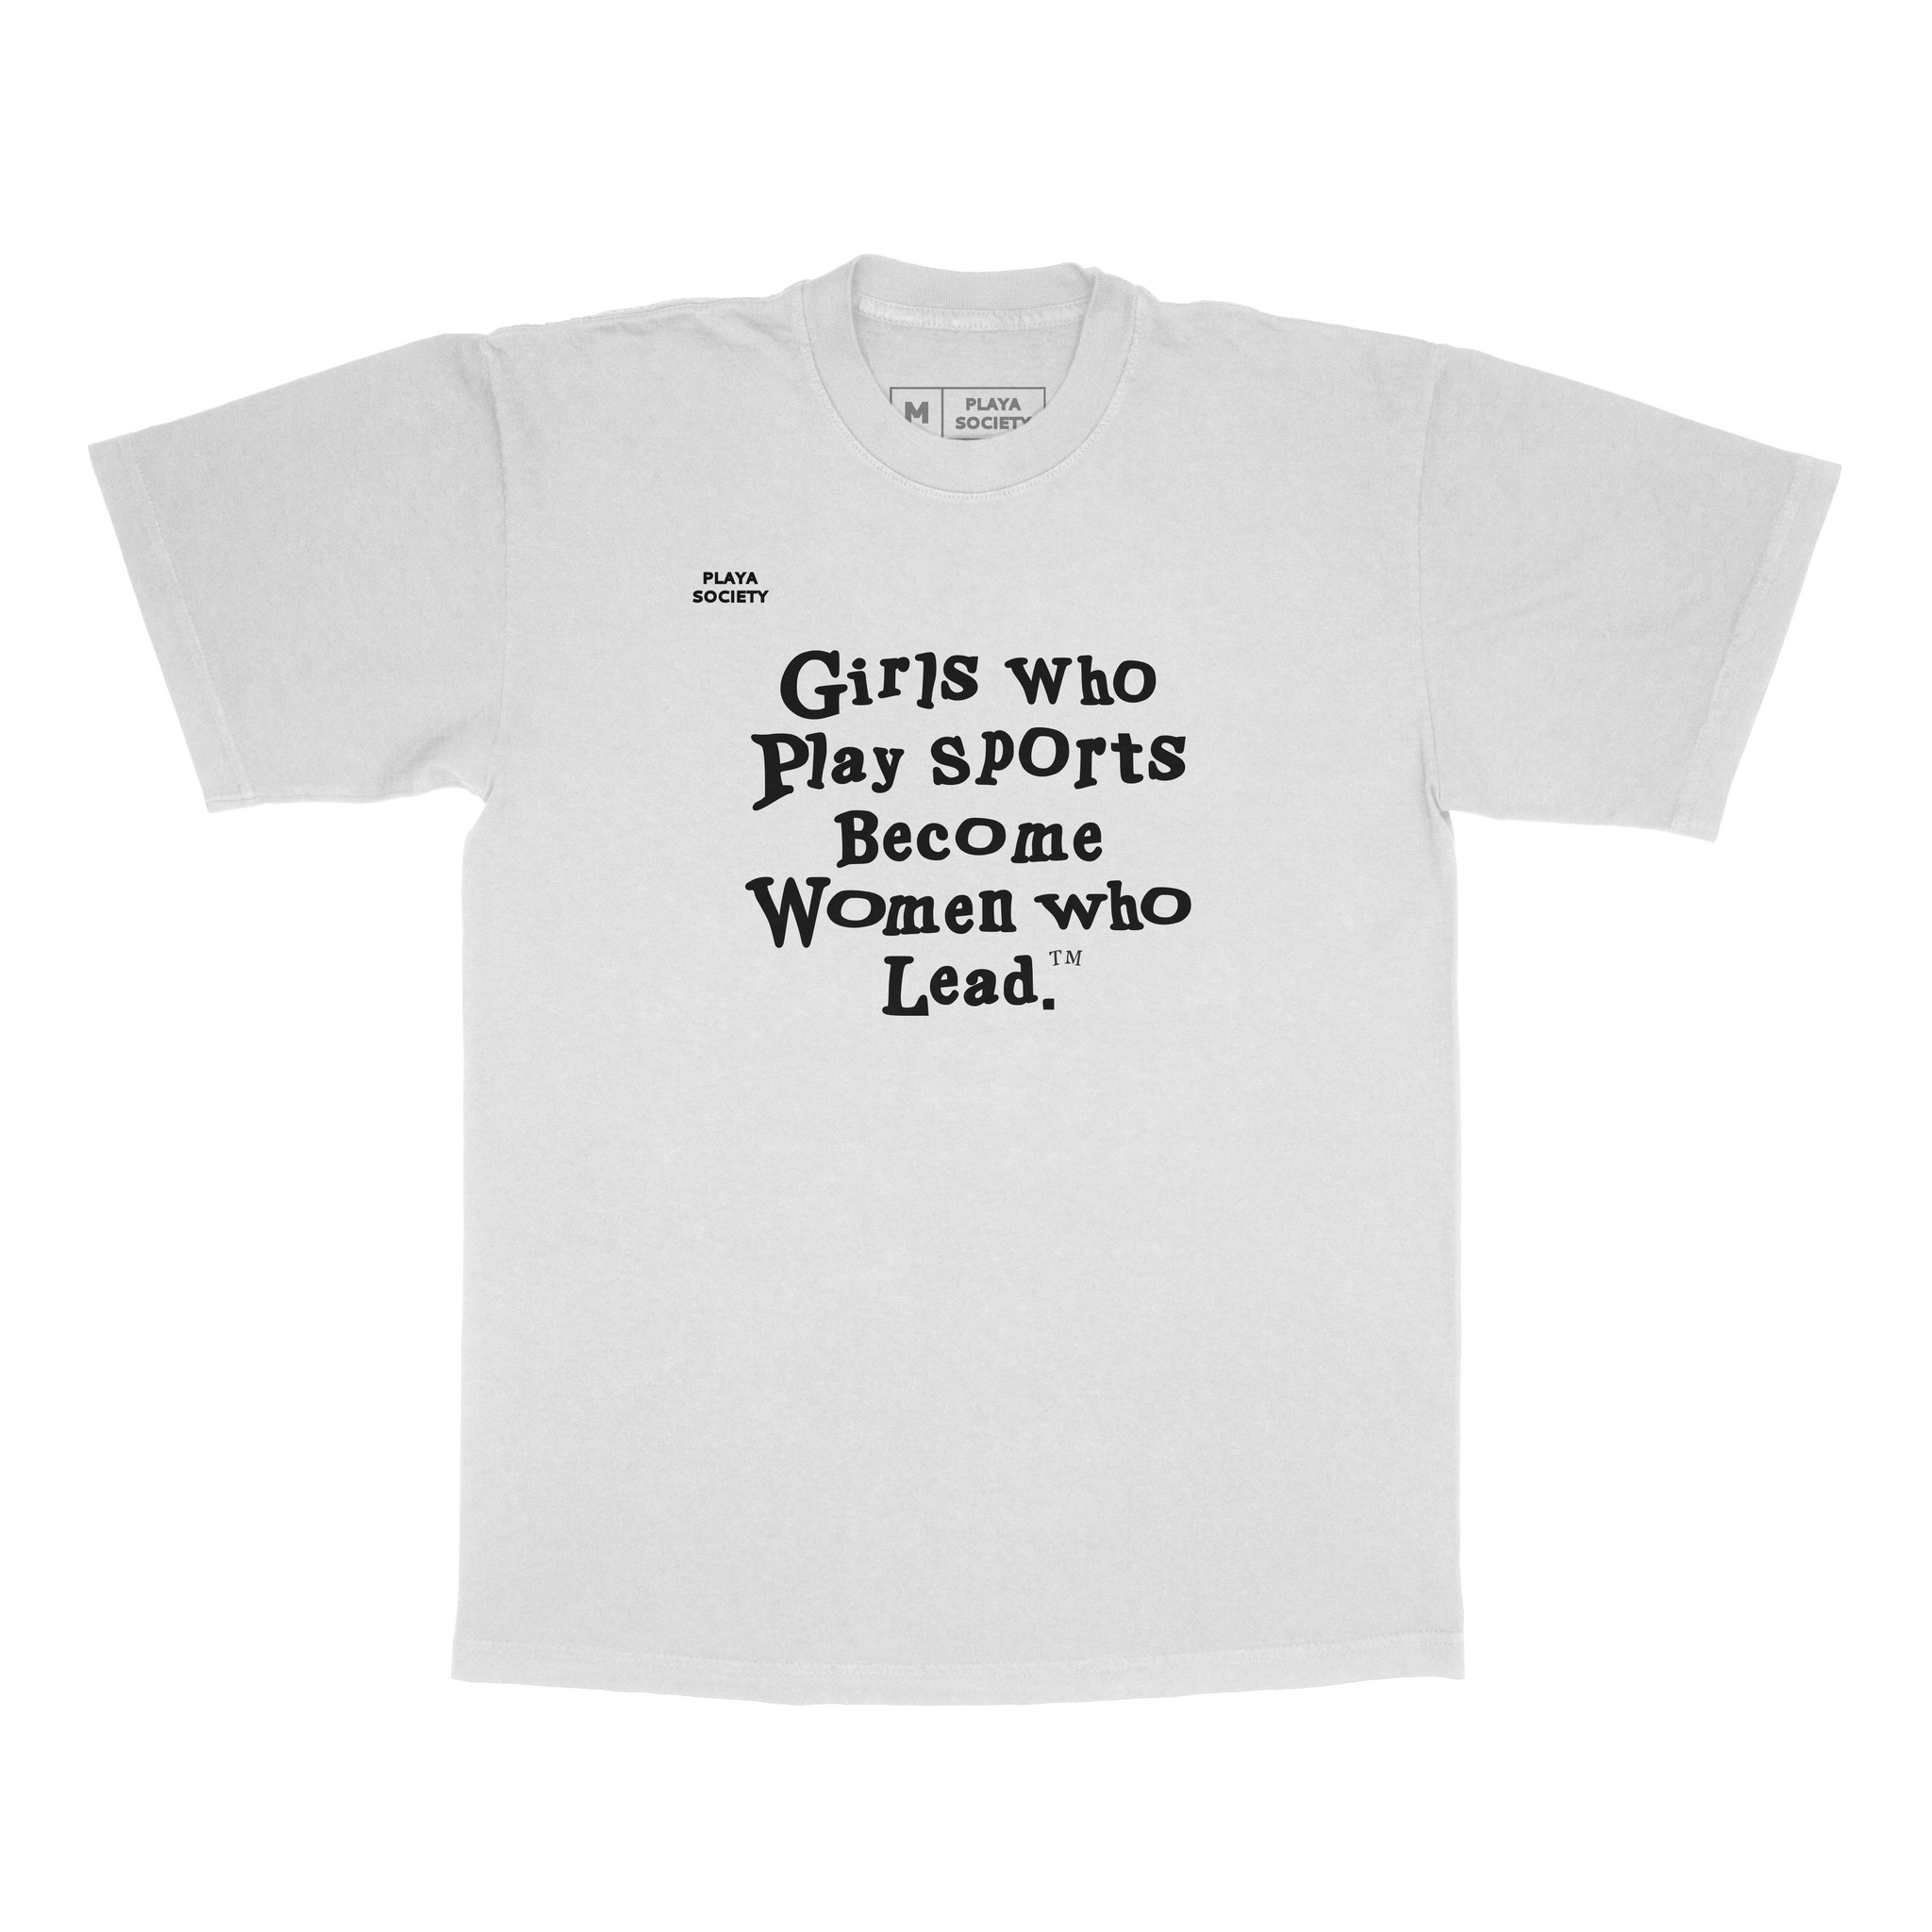 Playa Society "Girls Who Play Sports" T-shirt